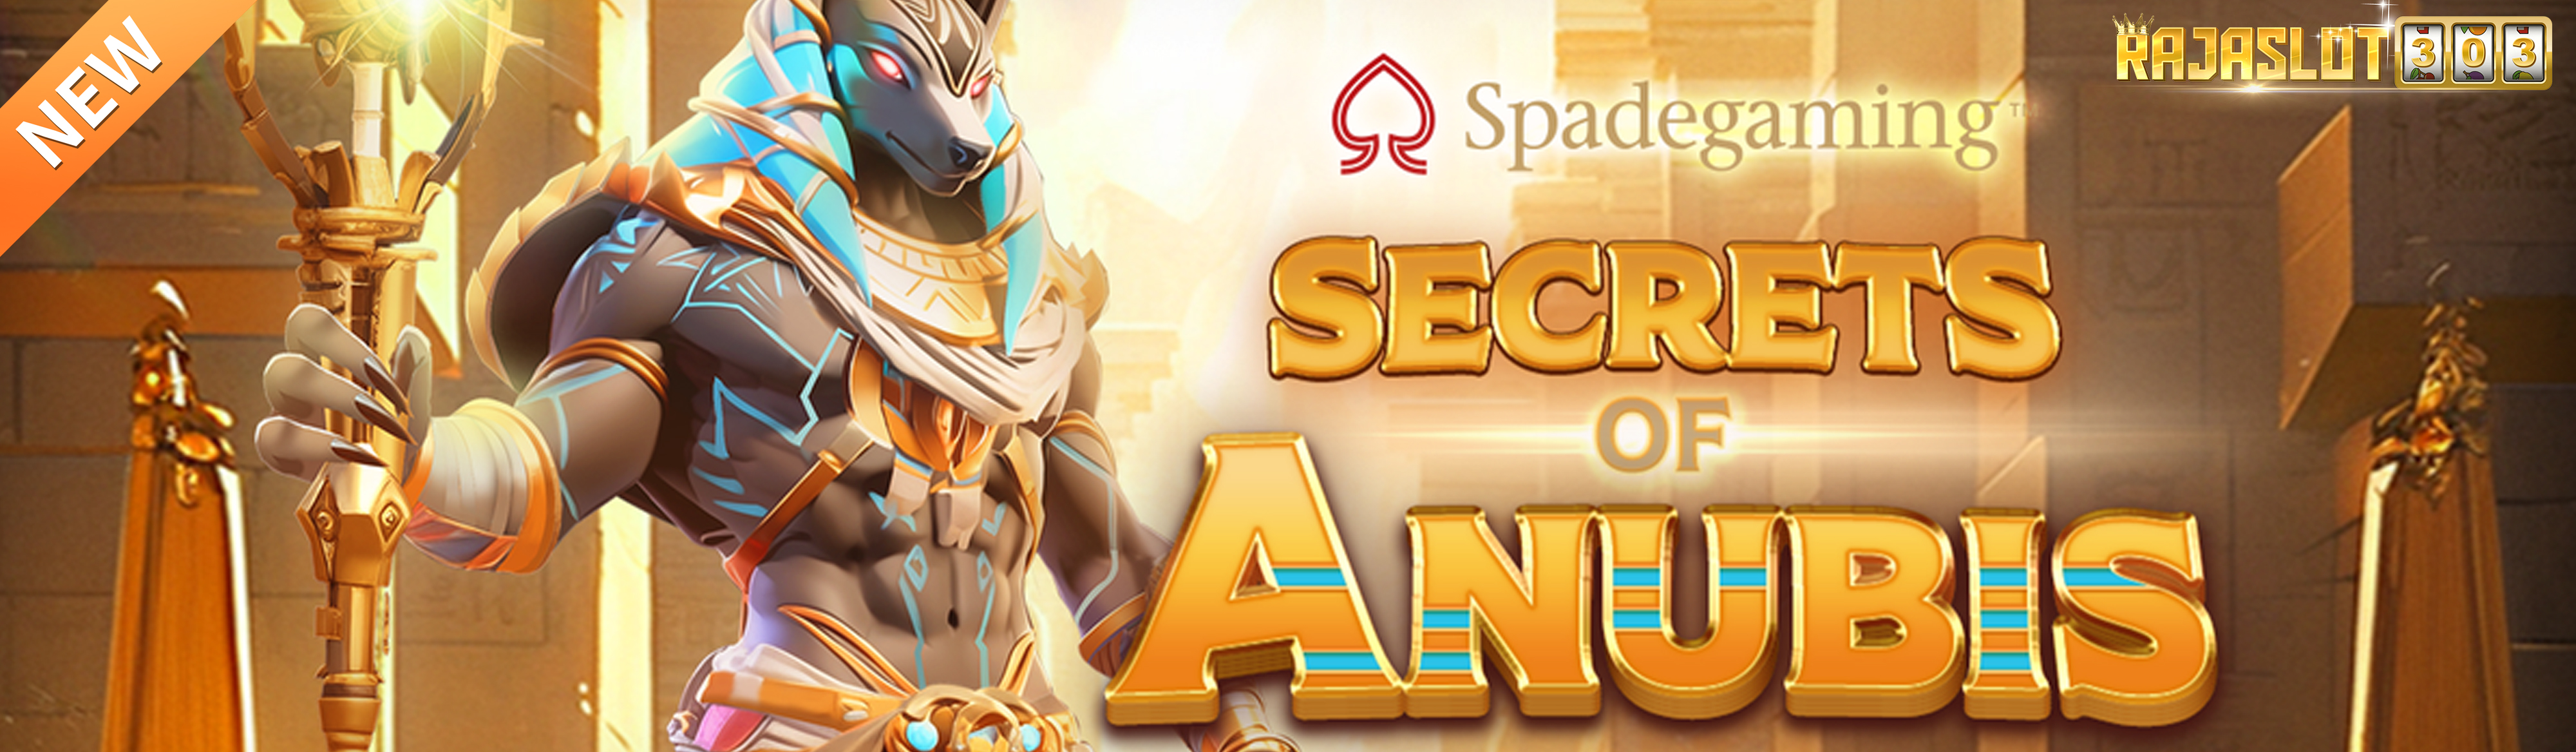 Secret Of Anubis Rajaslot303